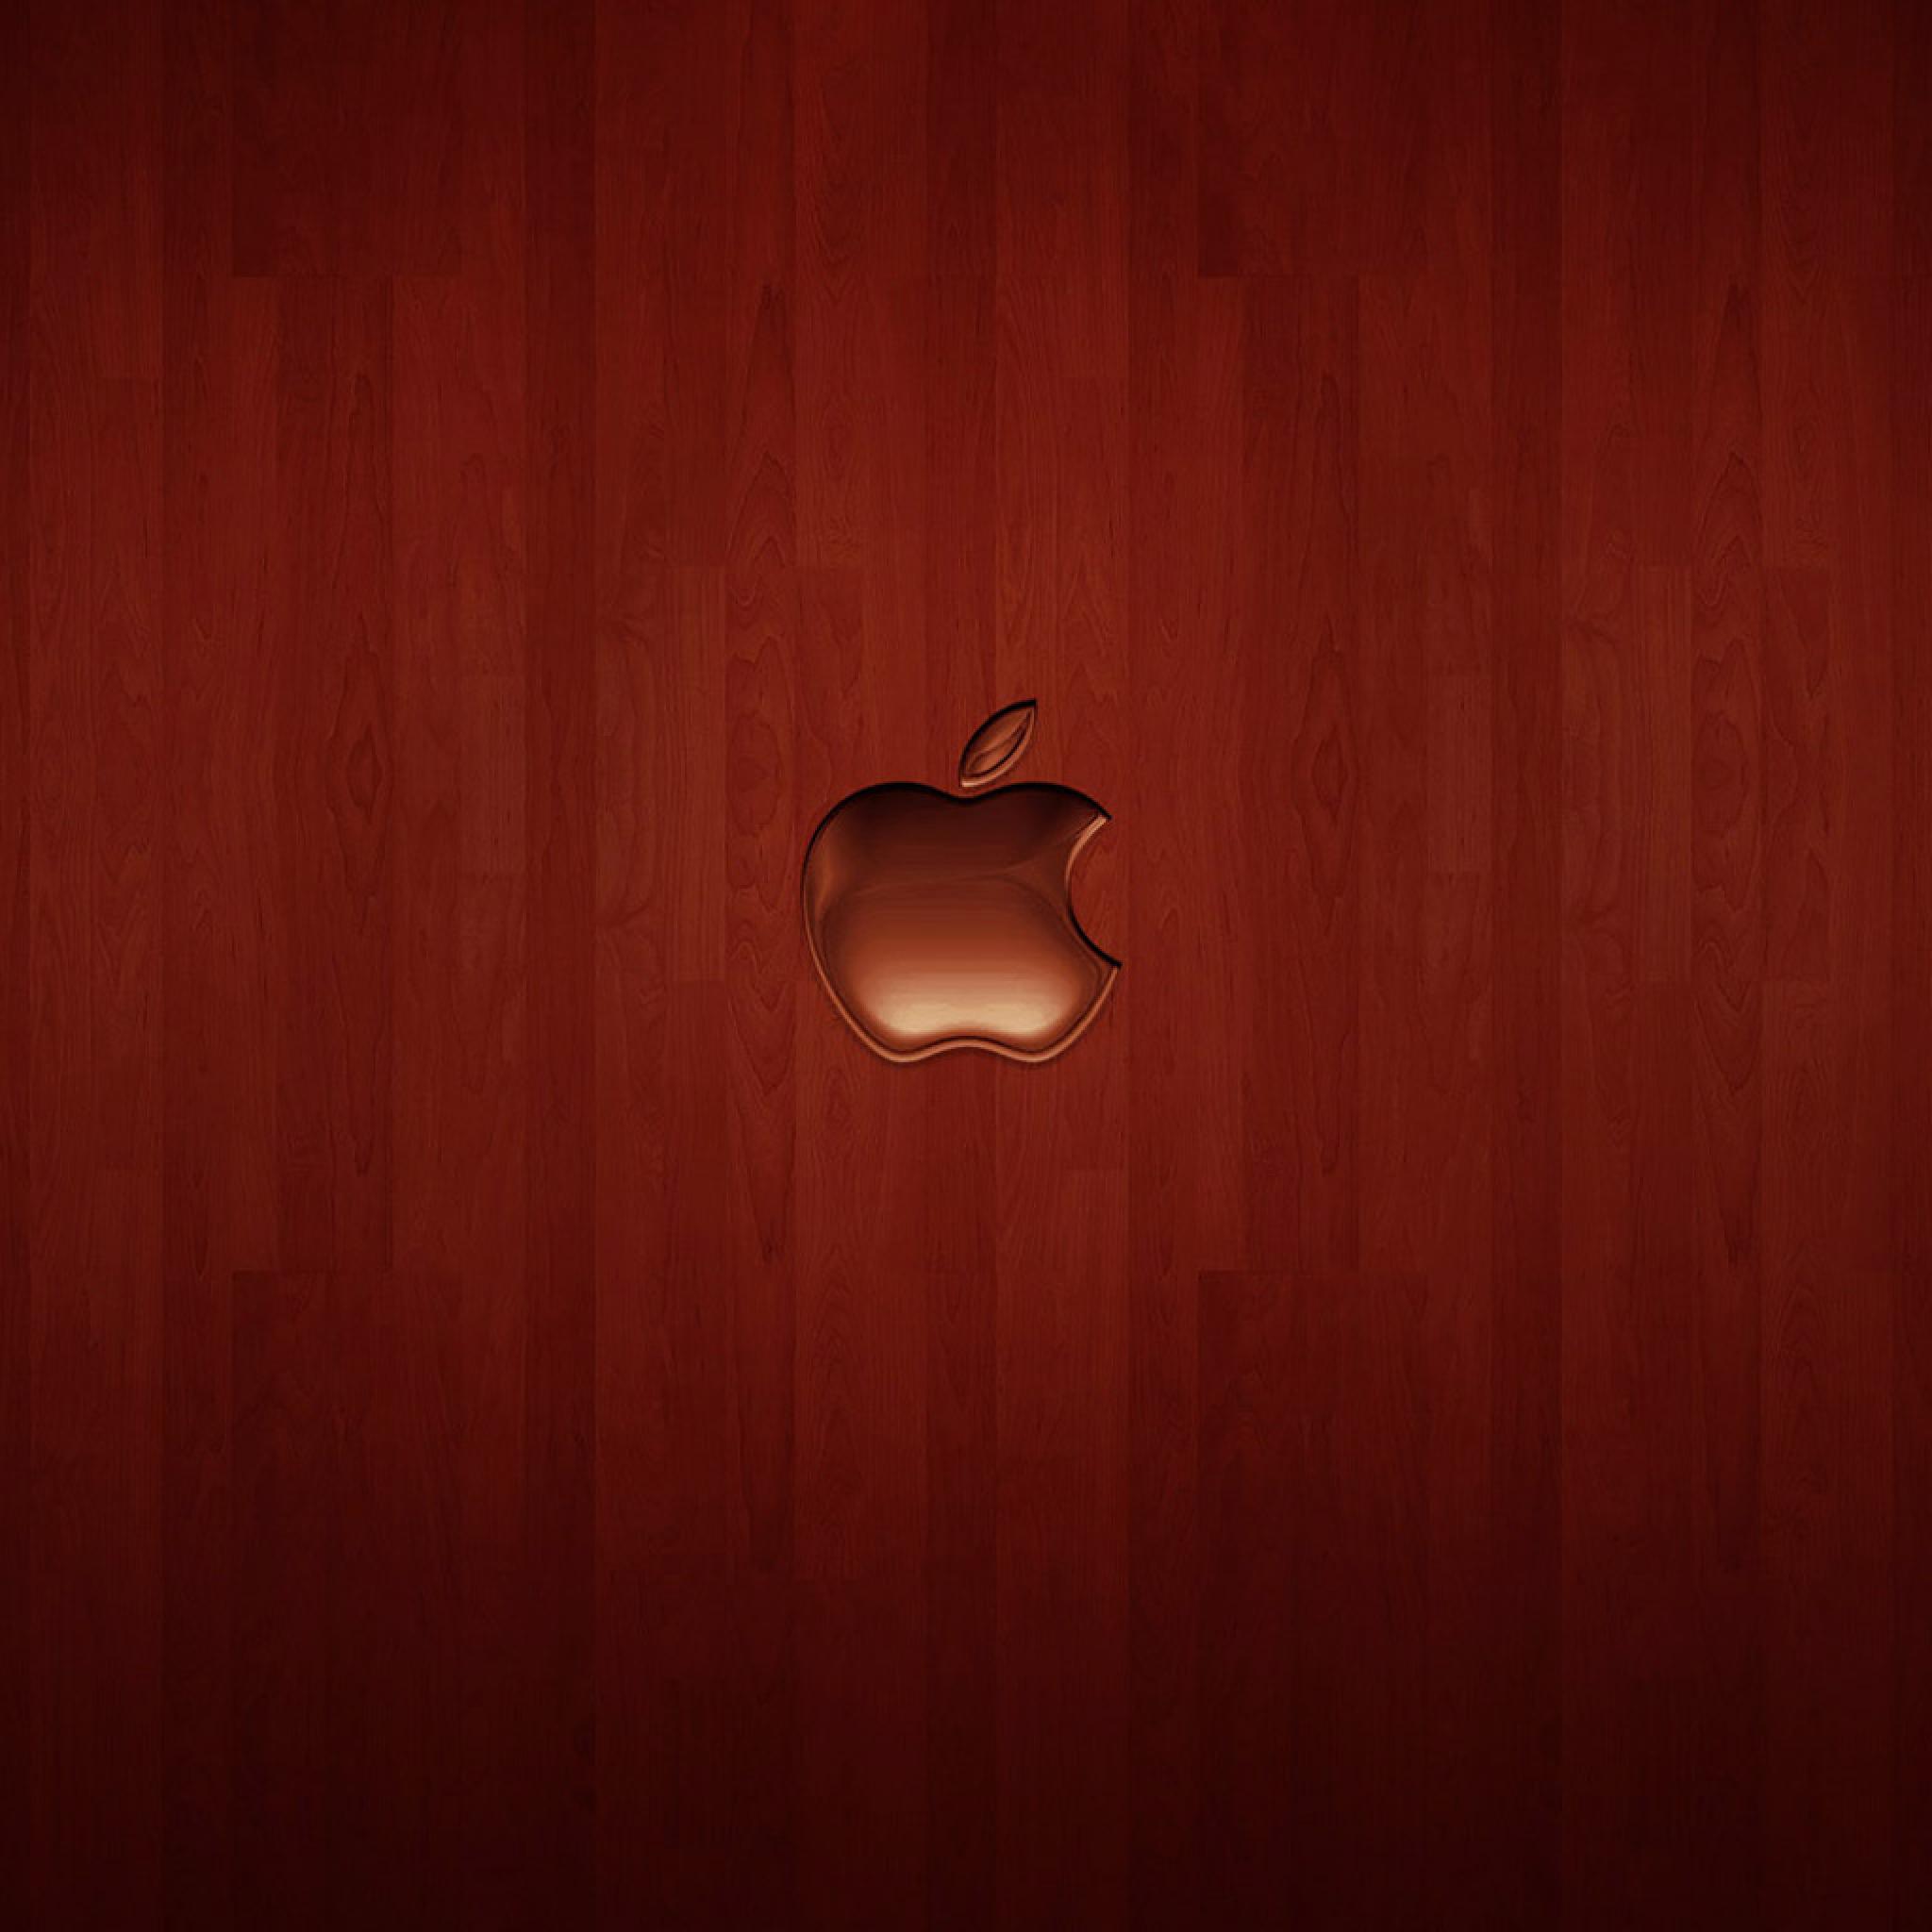 Desktop green apple wood wallpaper hd download